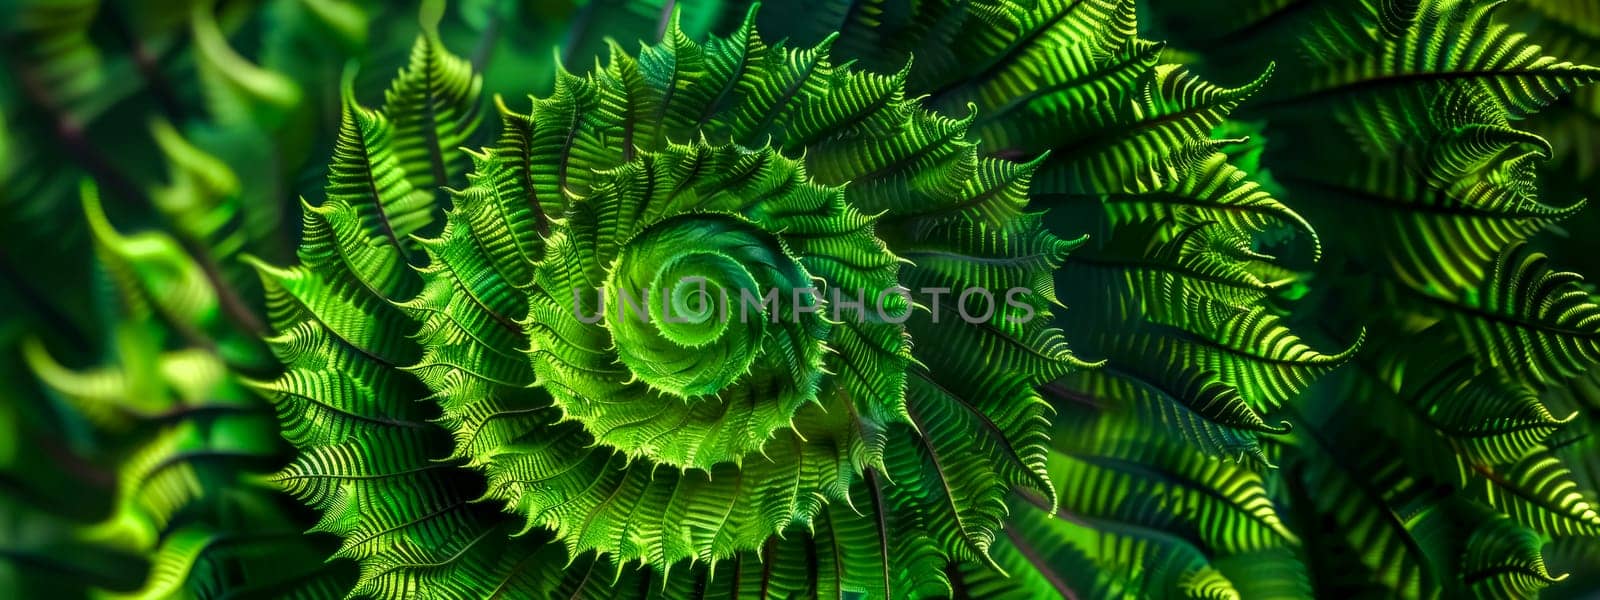 Lush green fern spiral close-up by Edophoto